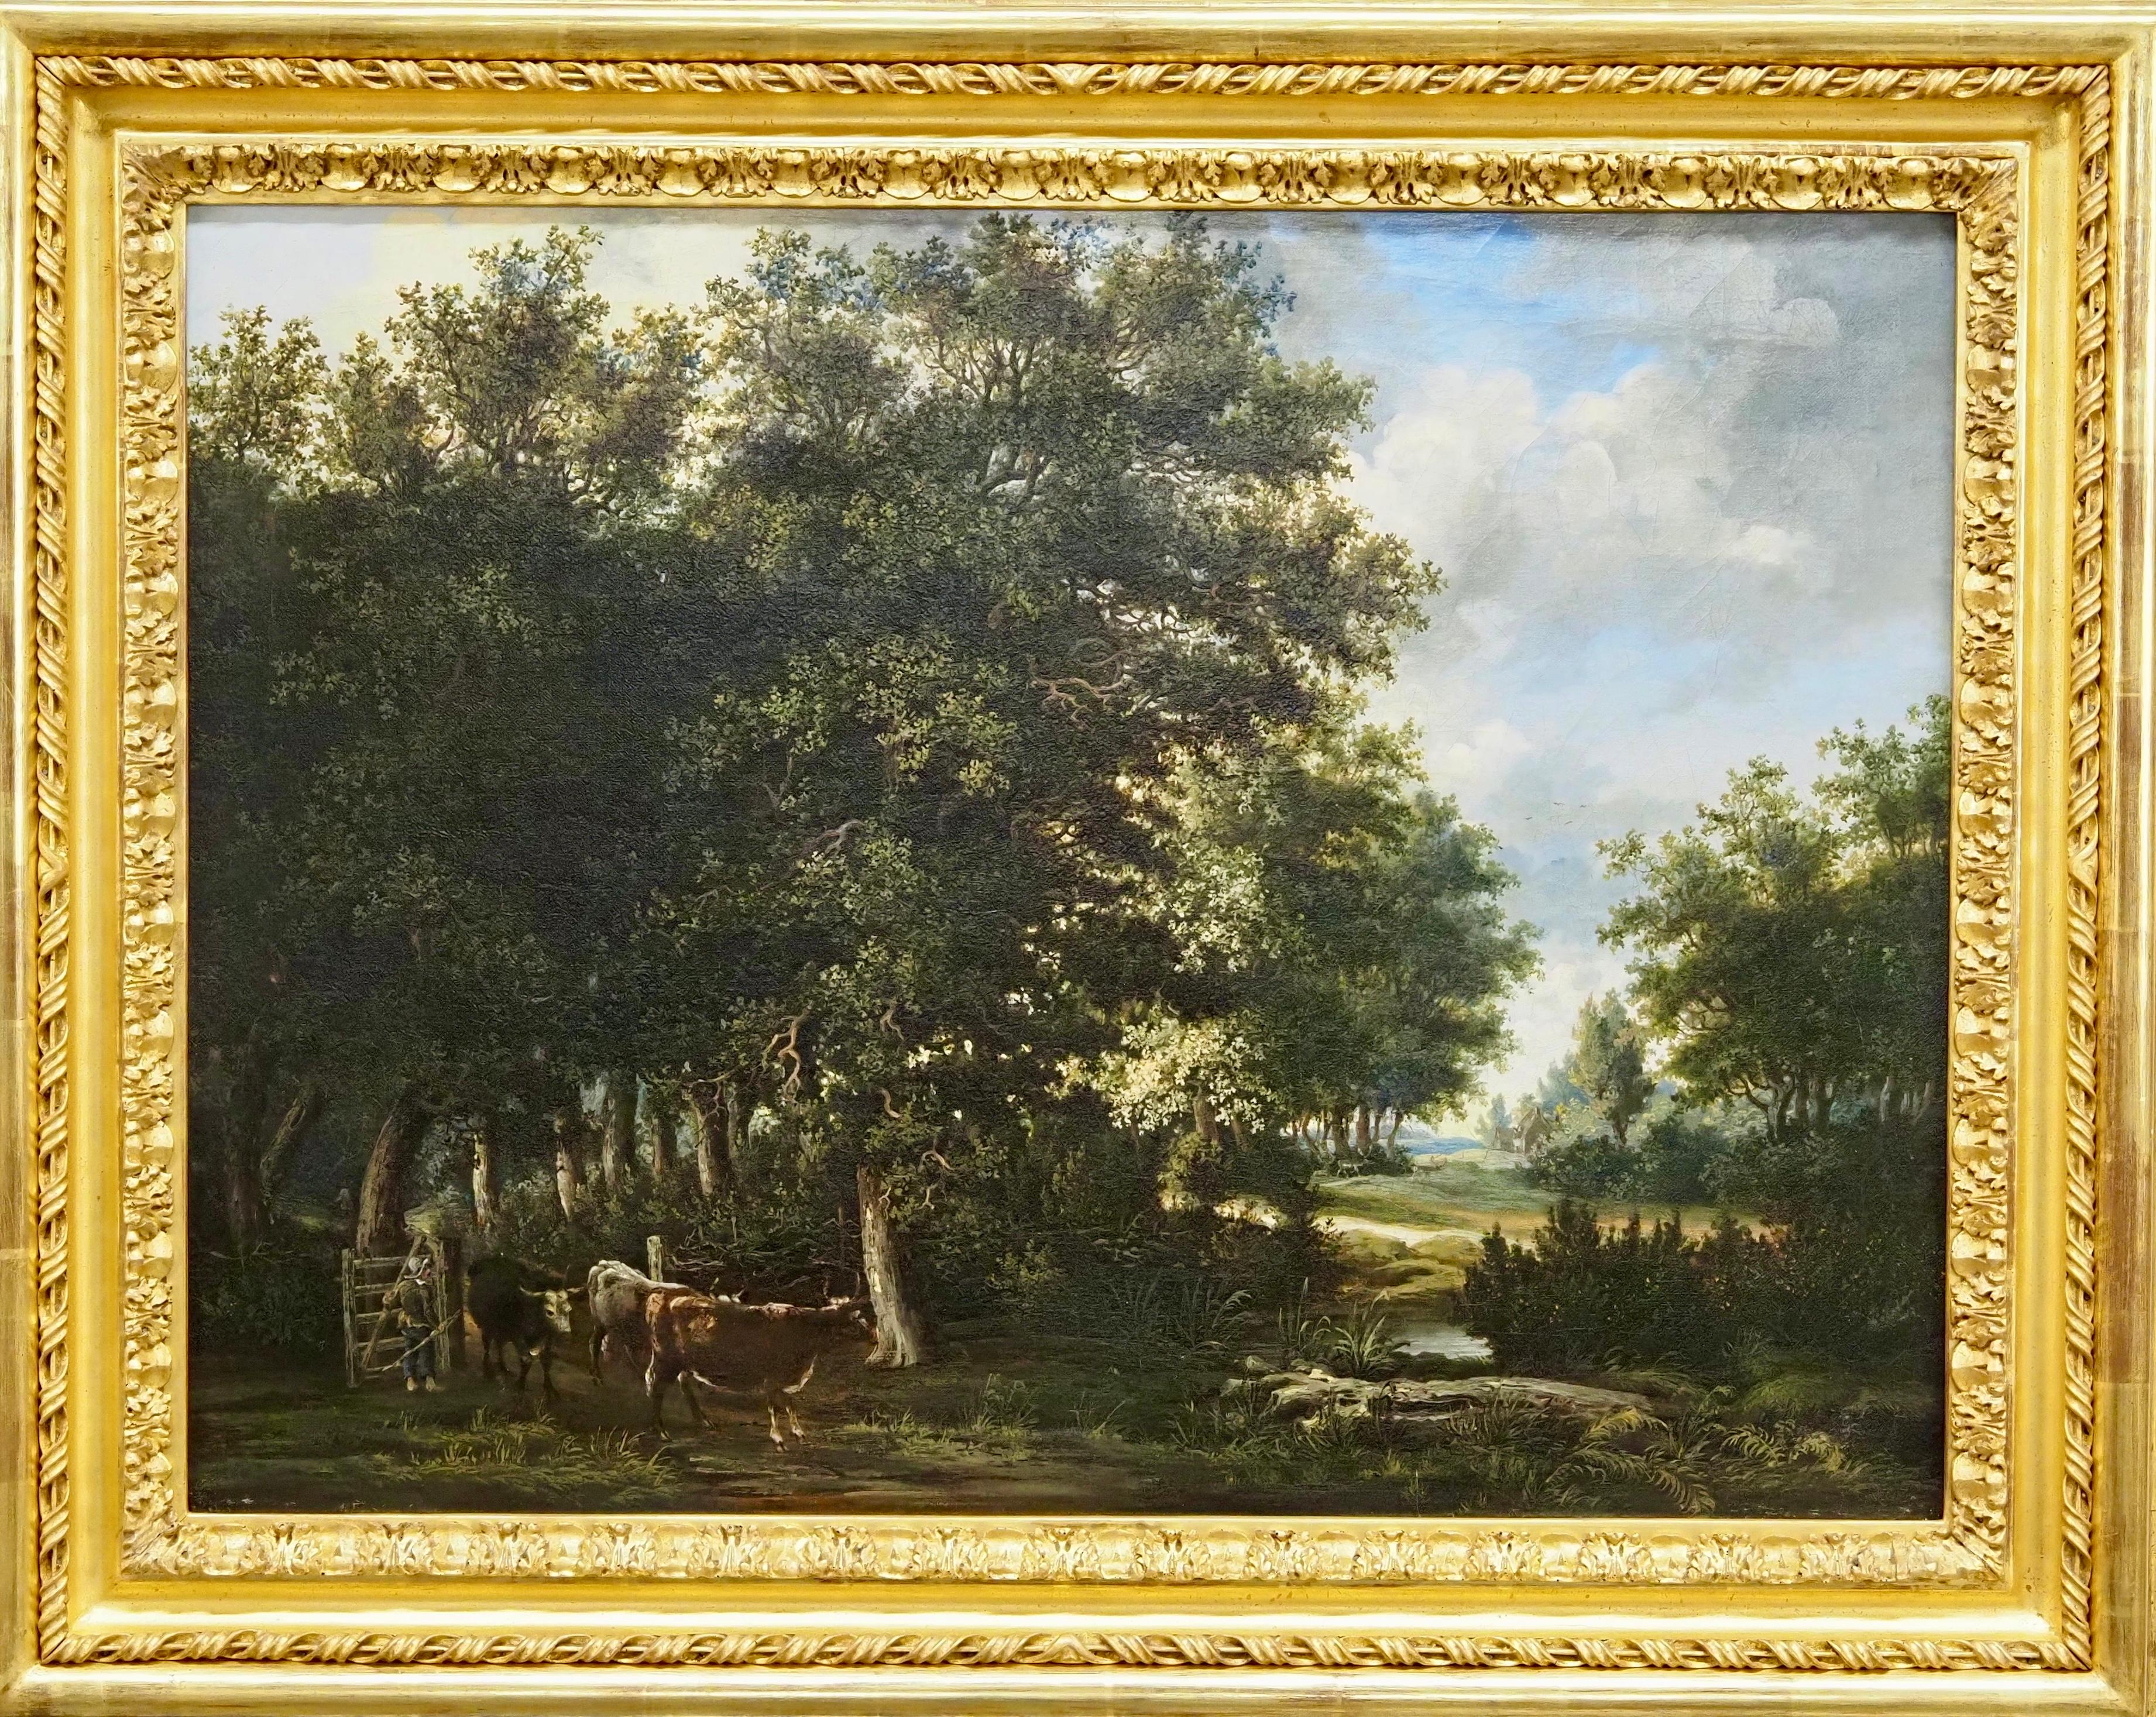 James Stark Landscape Painting - Herding cattle through a wooded river landscape